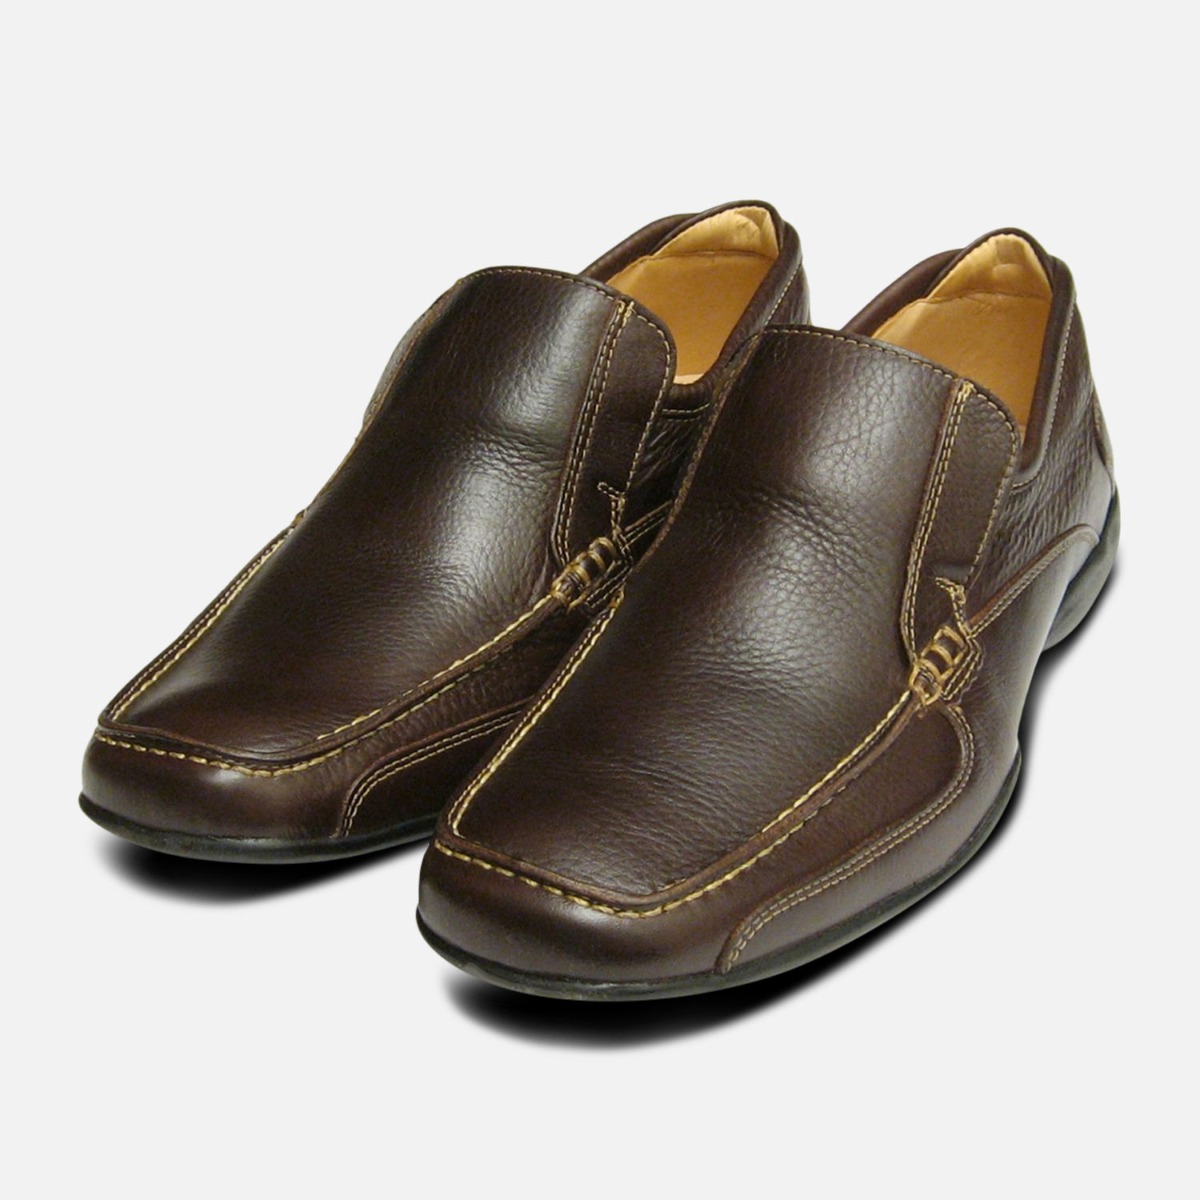 dark brown casual shoes